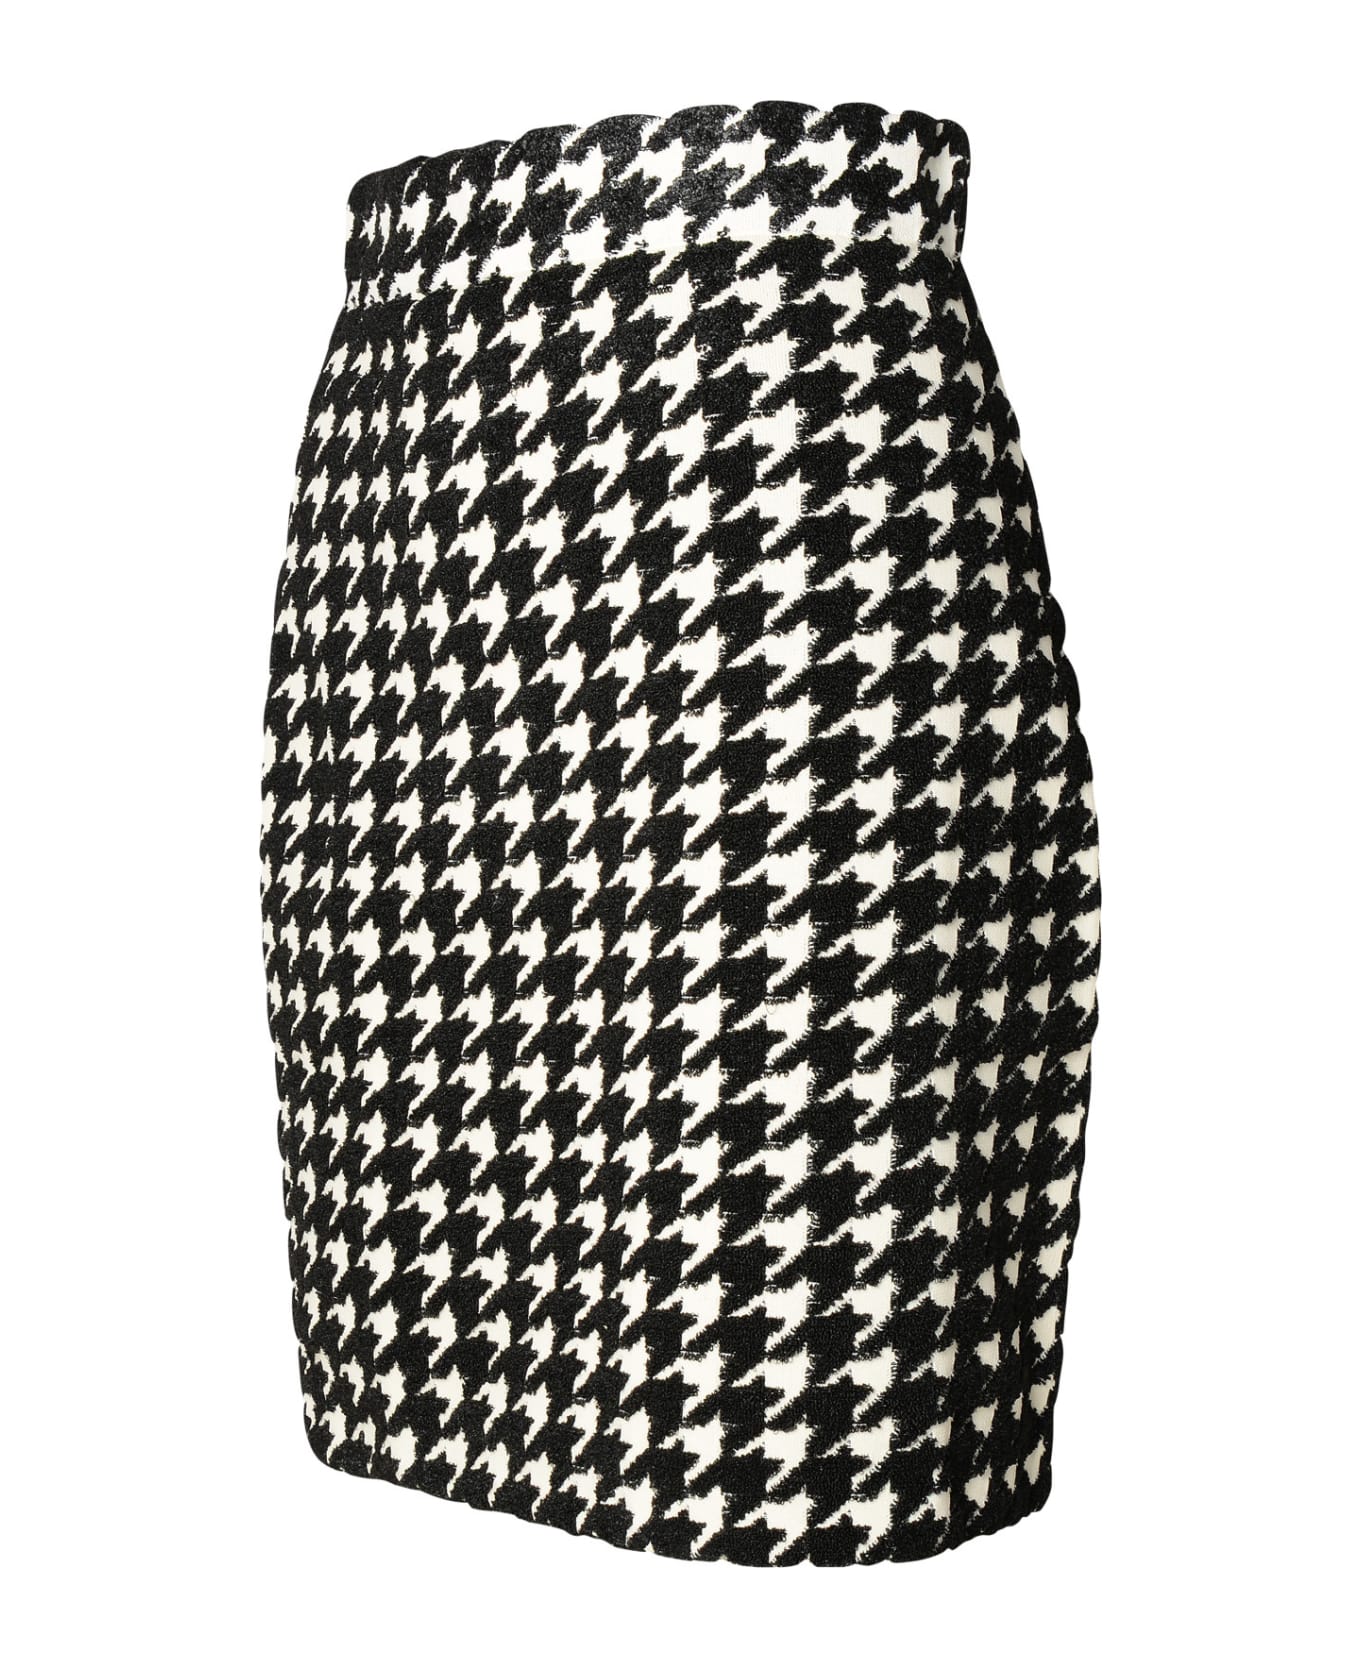 Burberry Black Viscose Blend Skirt - Multicolor